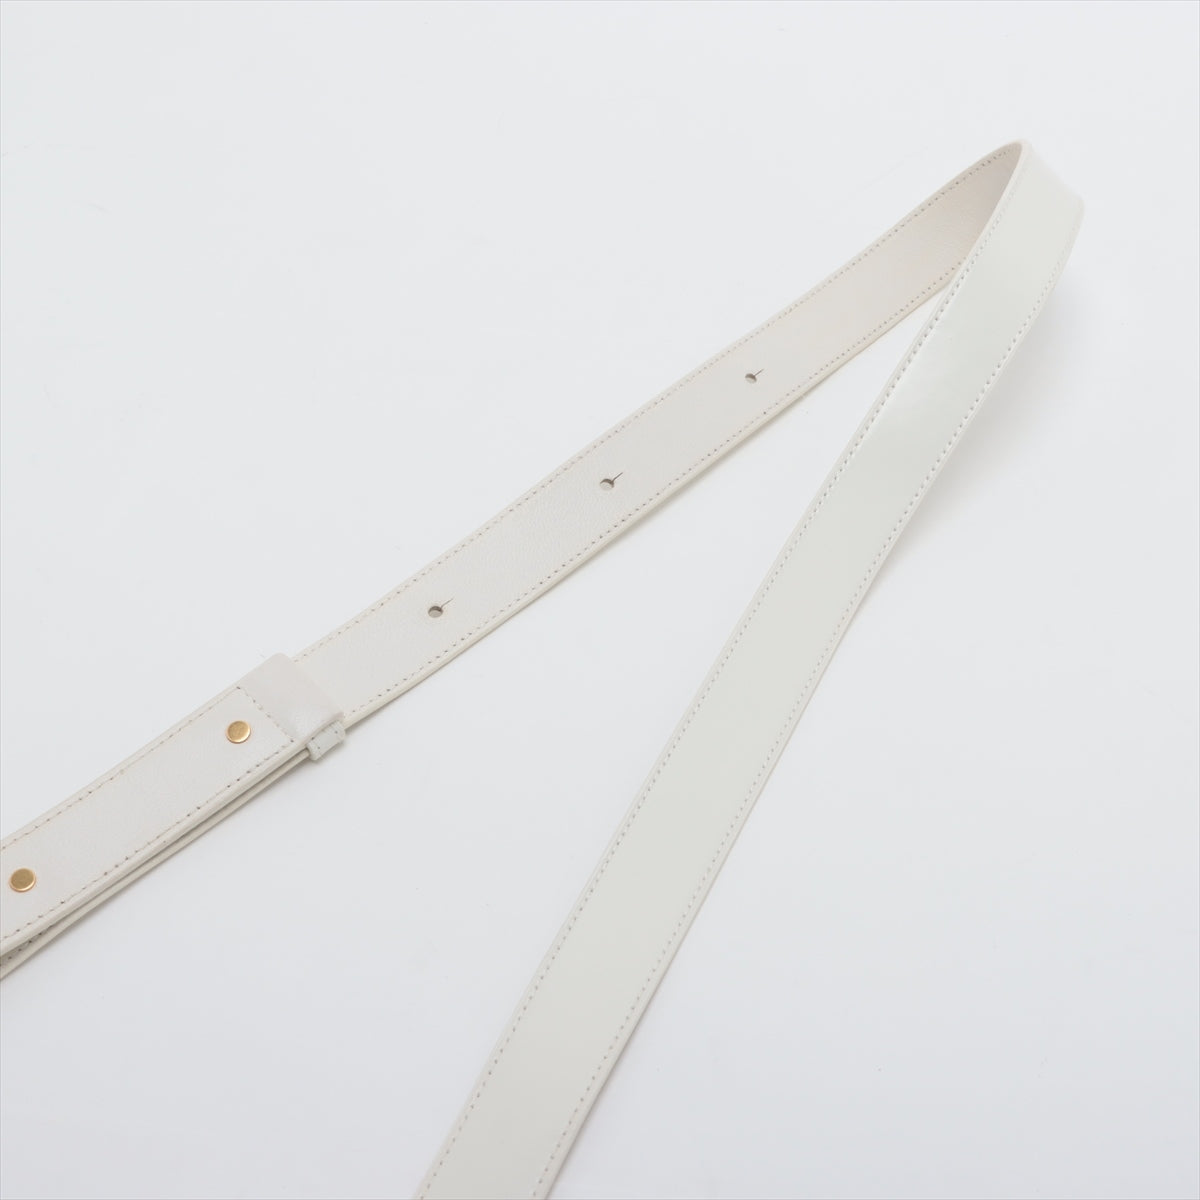 Bottega Veneta maxi intrecciato Cassette Patent leather Shoulder bag White